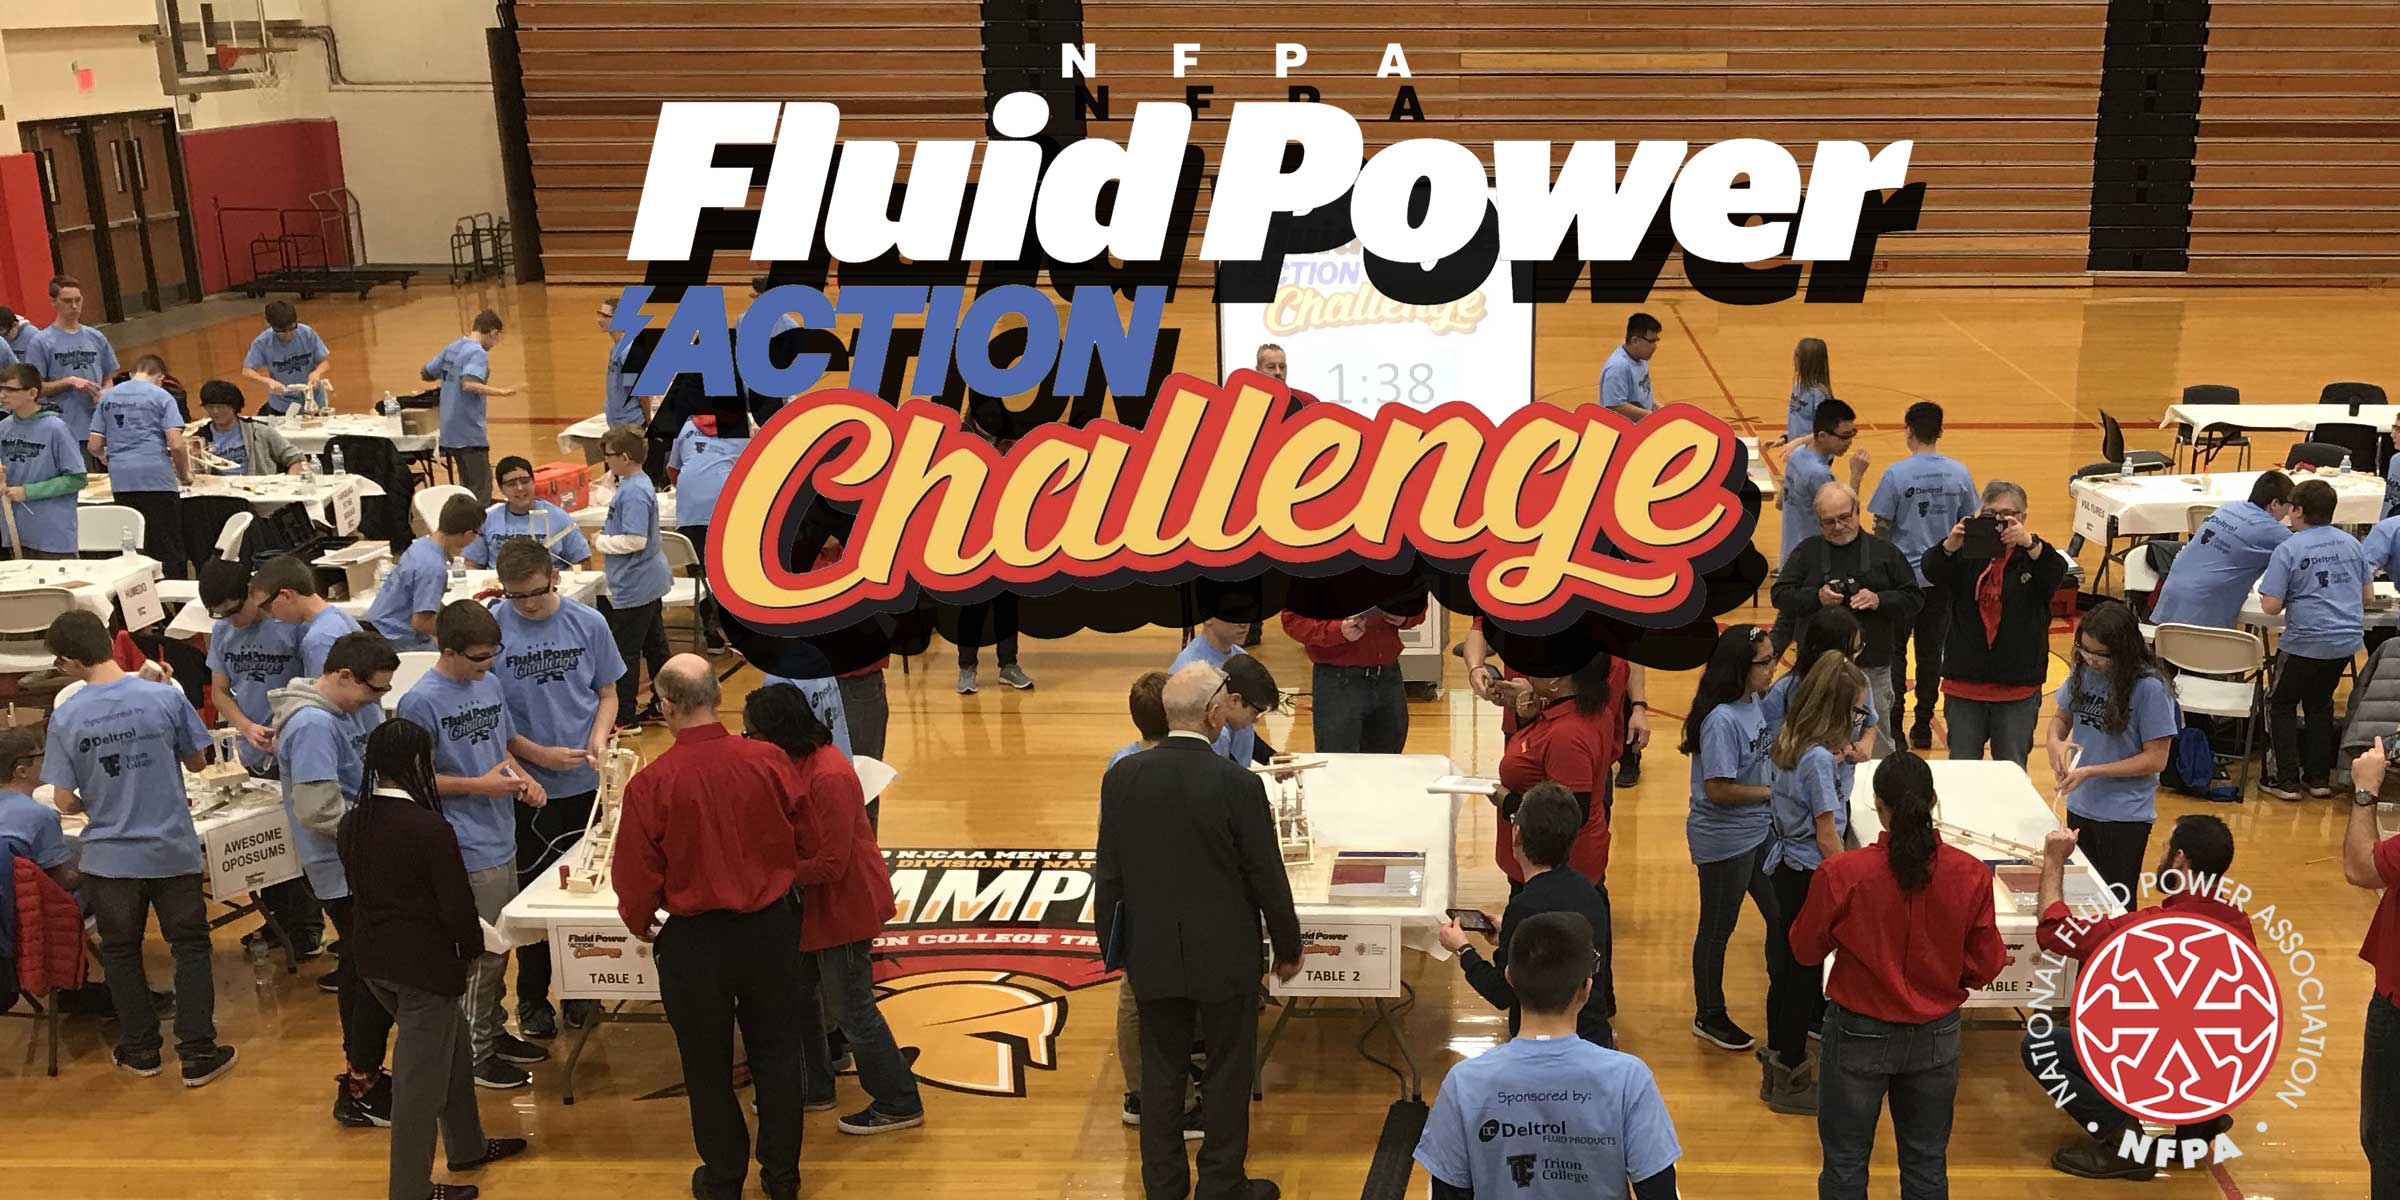 NFPA Fluid Power Vehicle Challenge